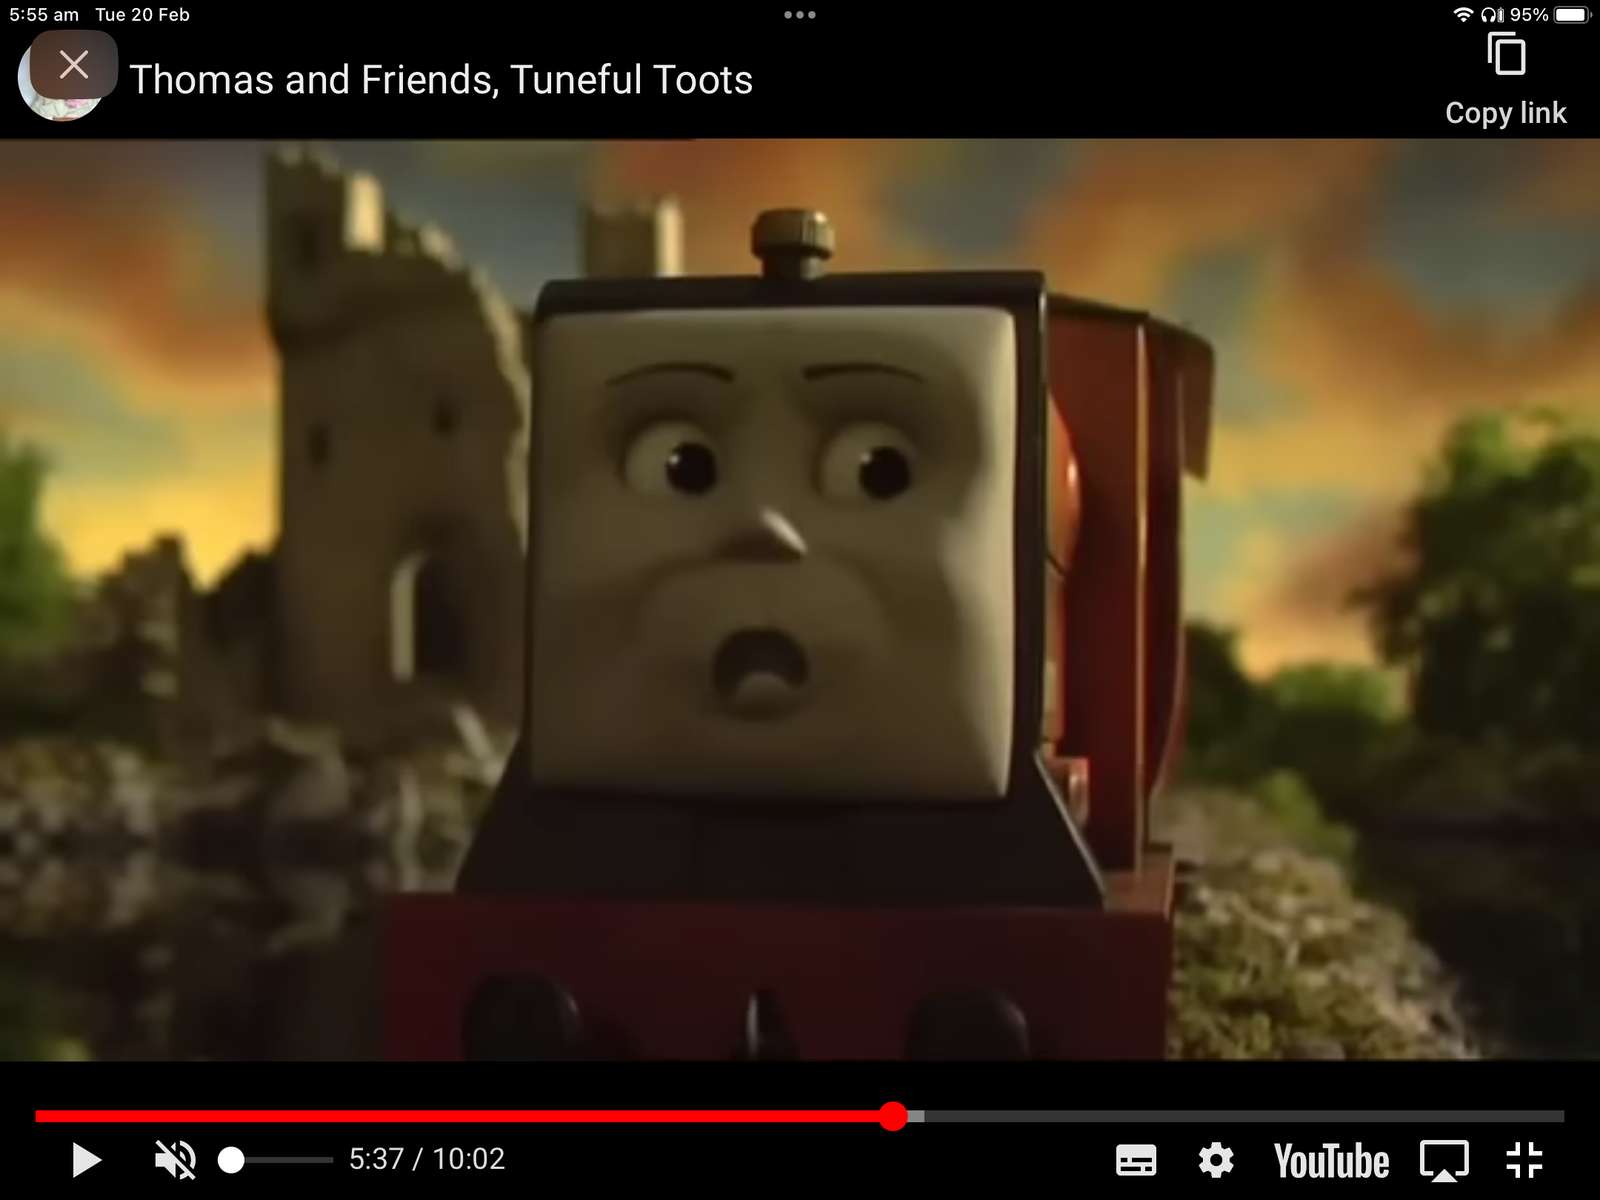 Thomas e amigos toots melodiosos puzzle online